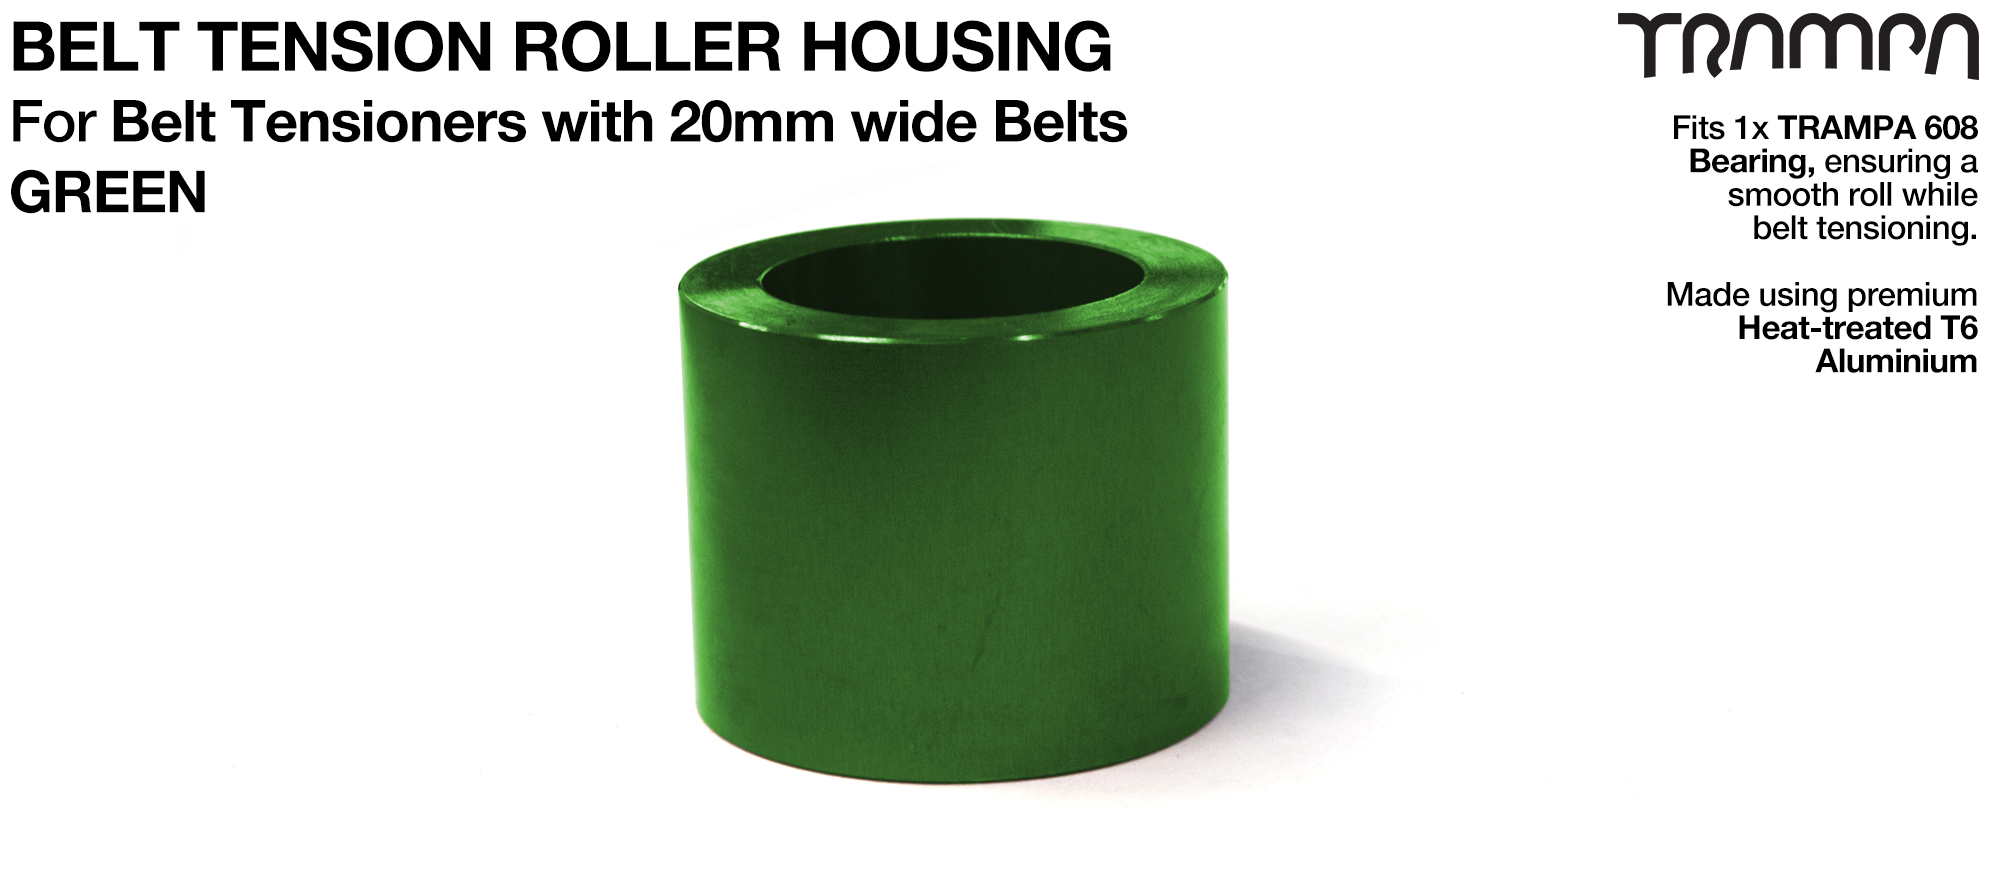 Belt Tension Roller Housing for 20mm Belts - GREEN